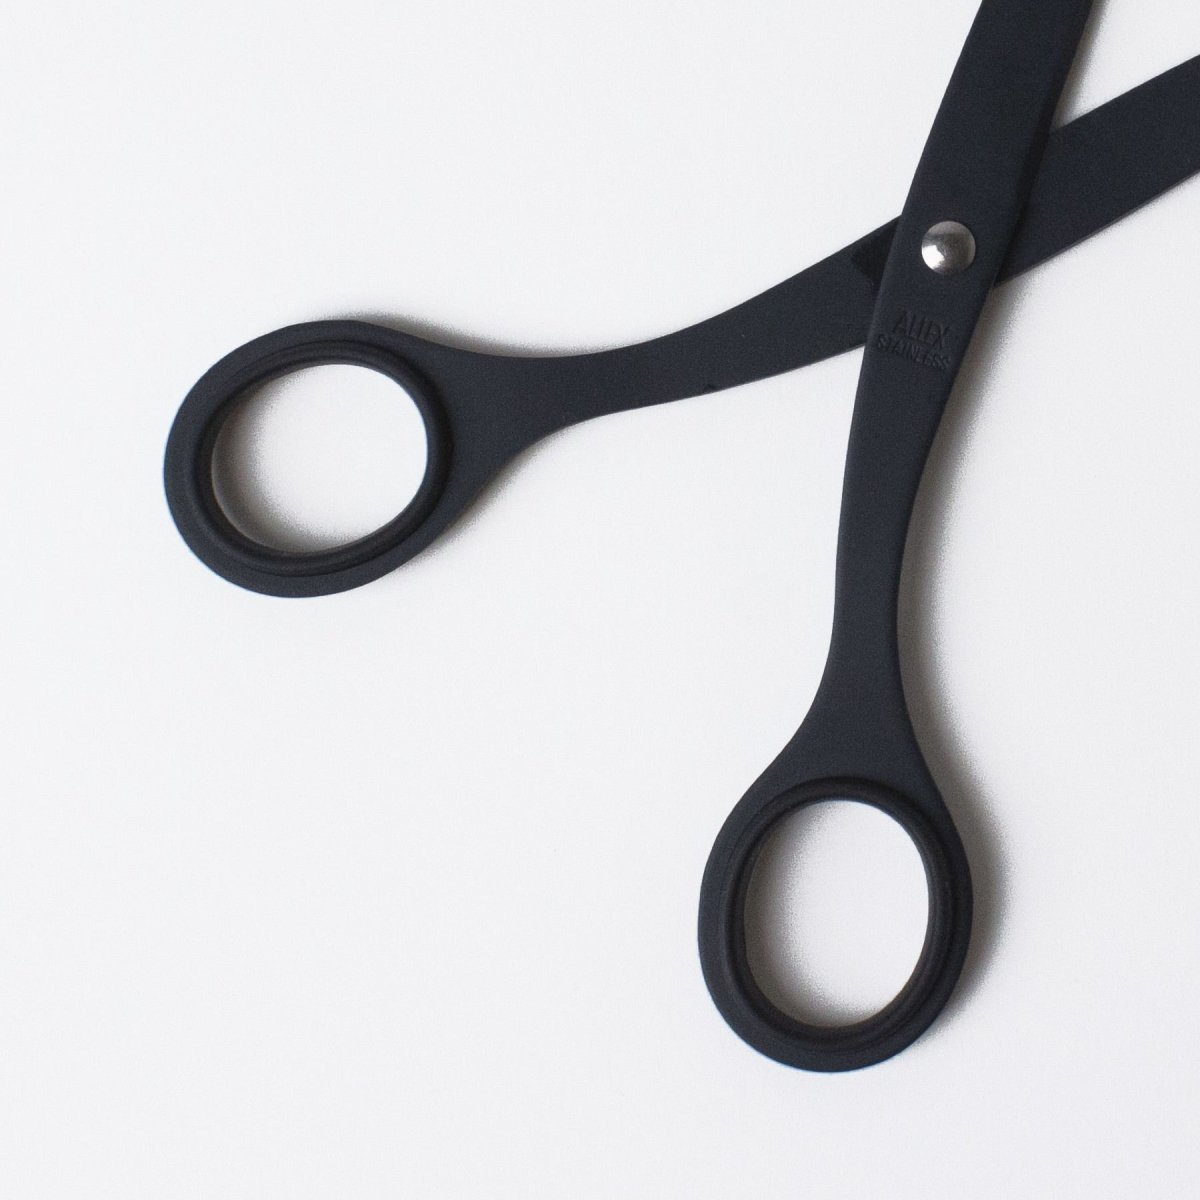 ALLEX Black Scissors - By Autotype